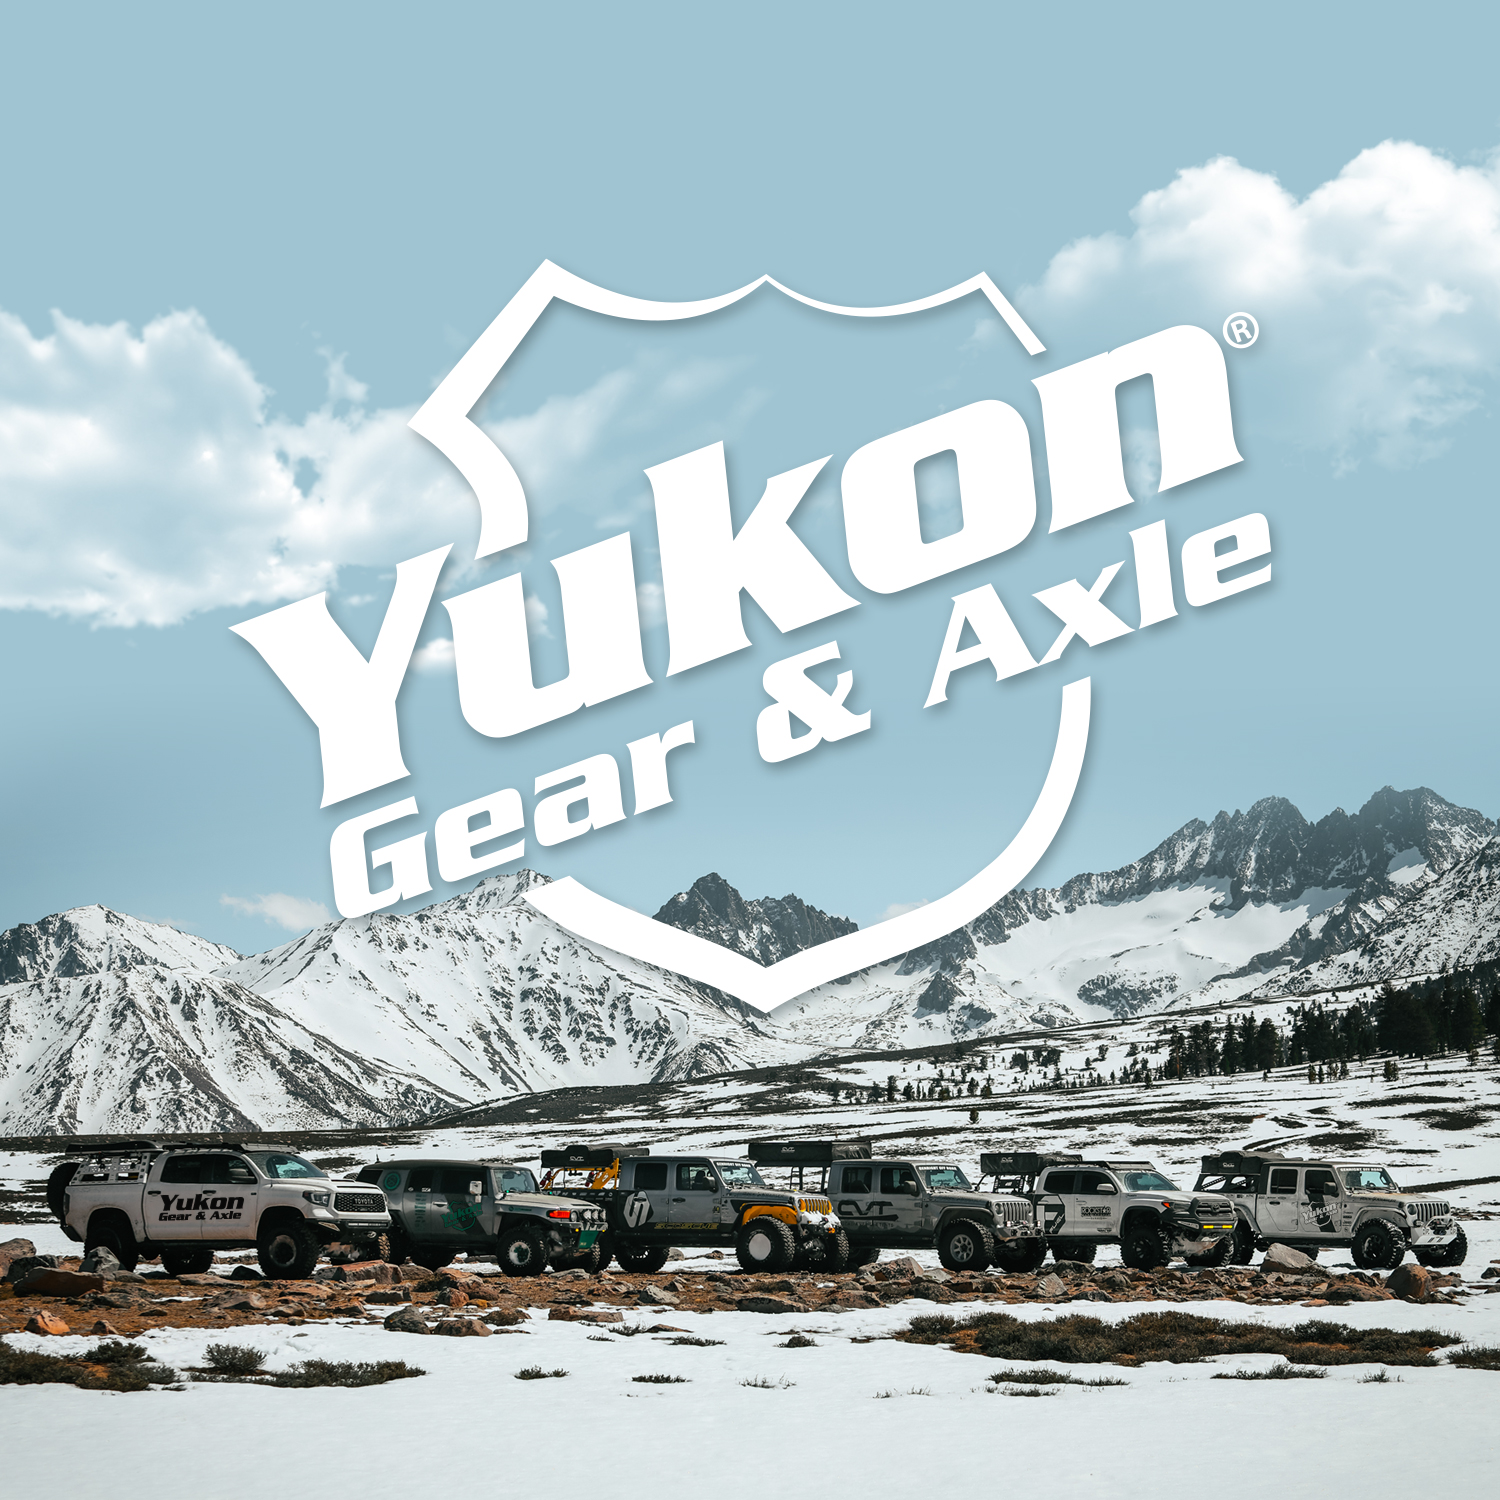 Yukon high performance ring & pinion gear set GM 12T, 4.11 ratio 